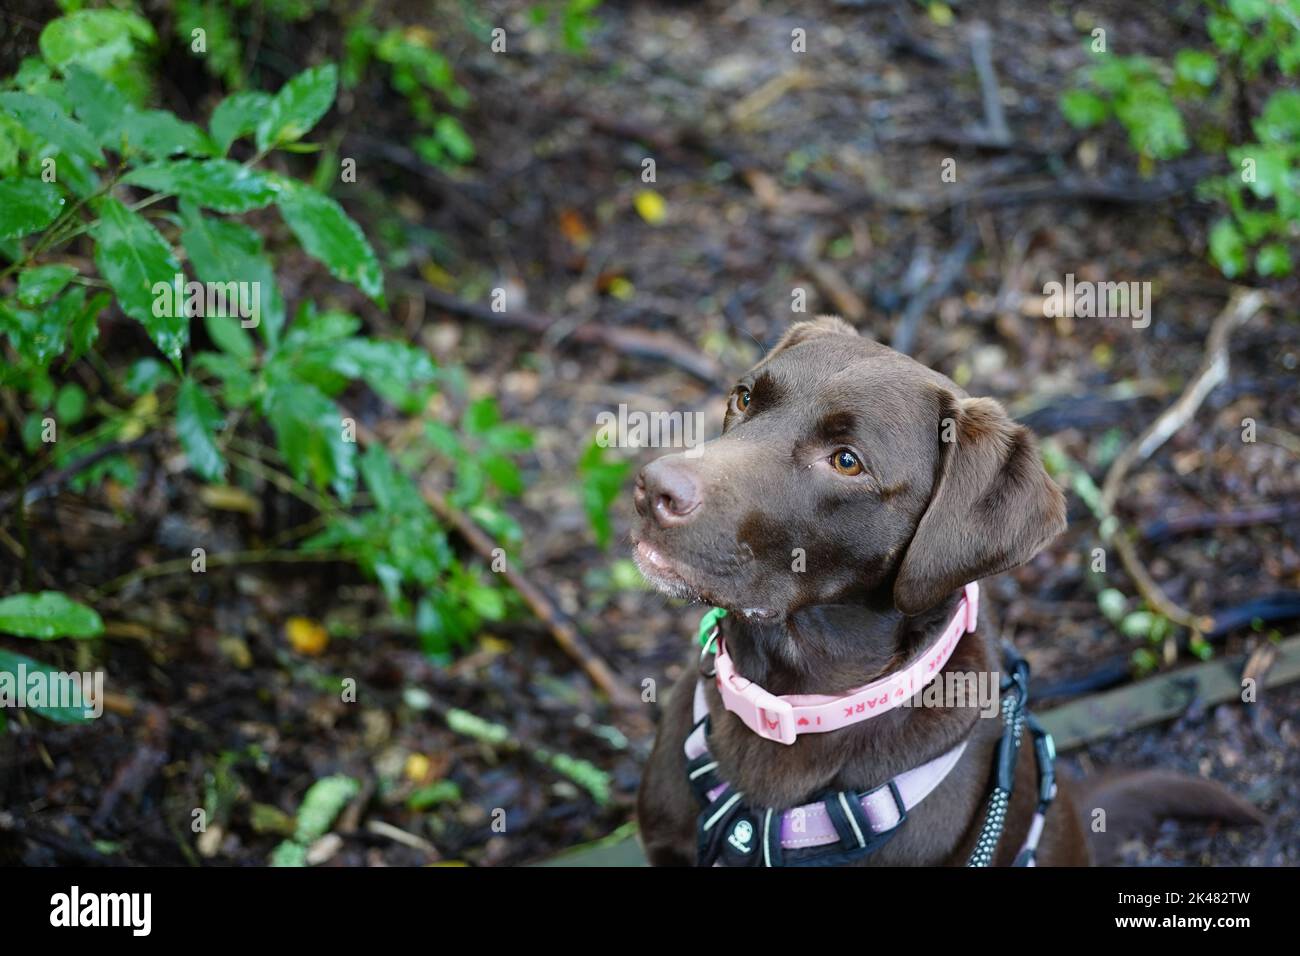 Walking a chocolate labrador dog through a forest Stock Photo